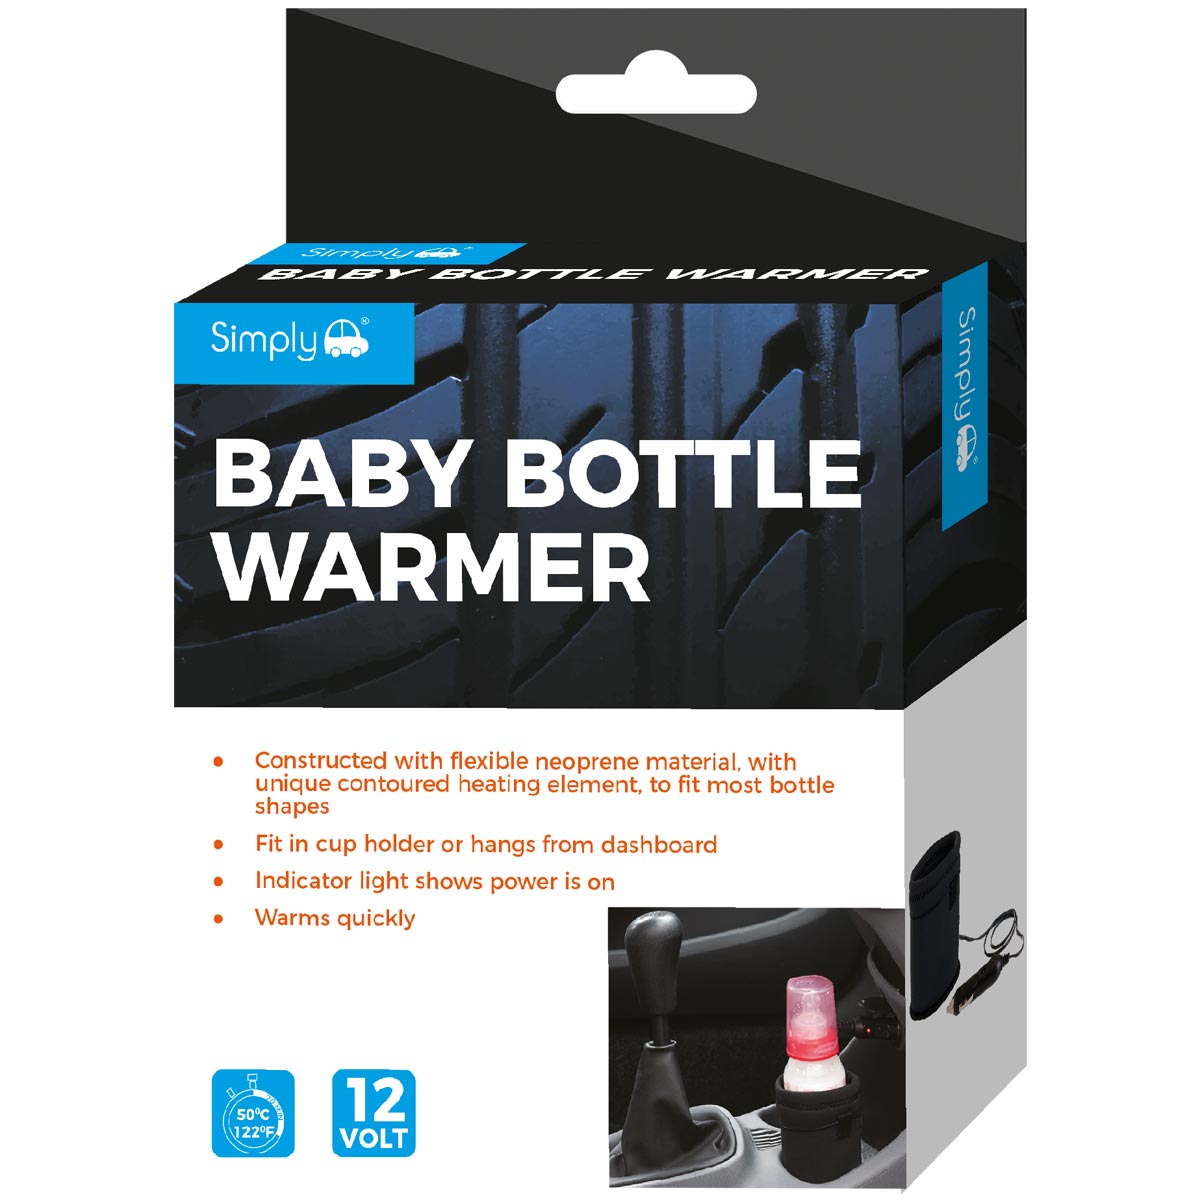 Simply Baby Bottle Warmer - Black